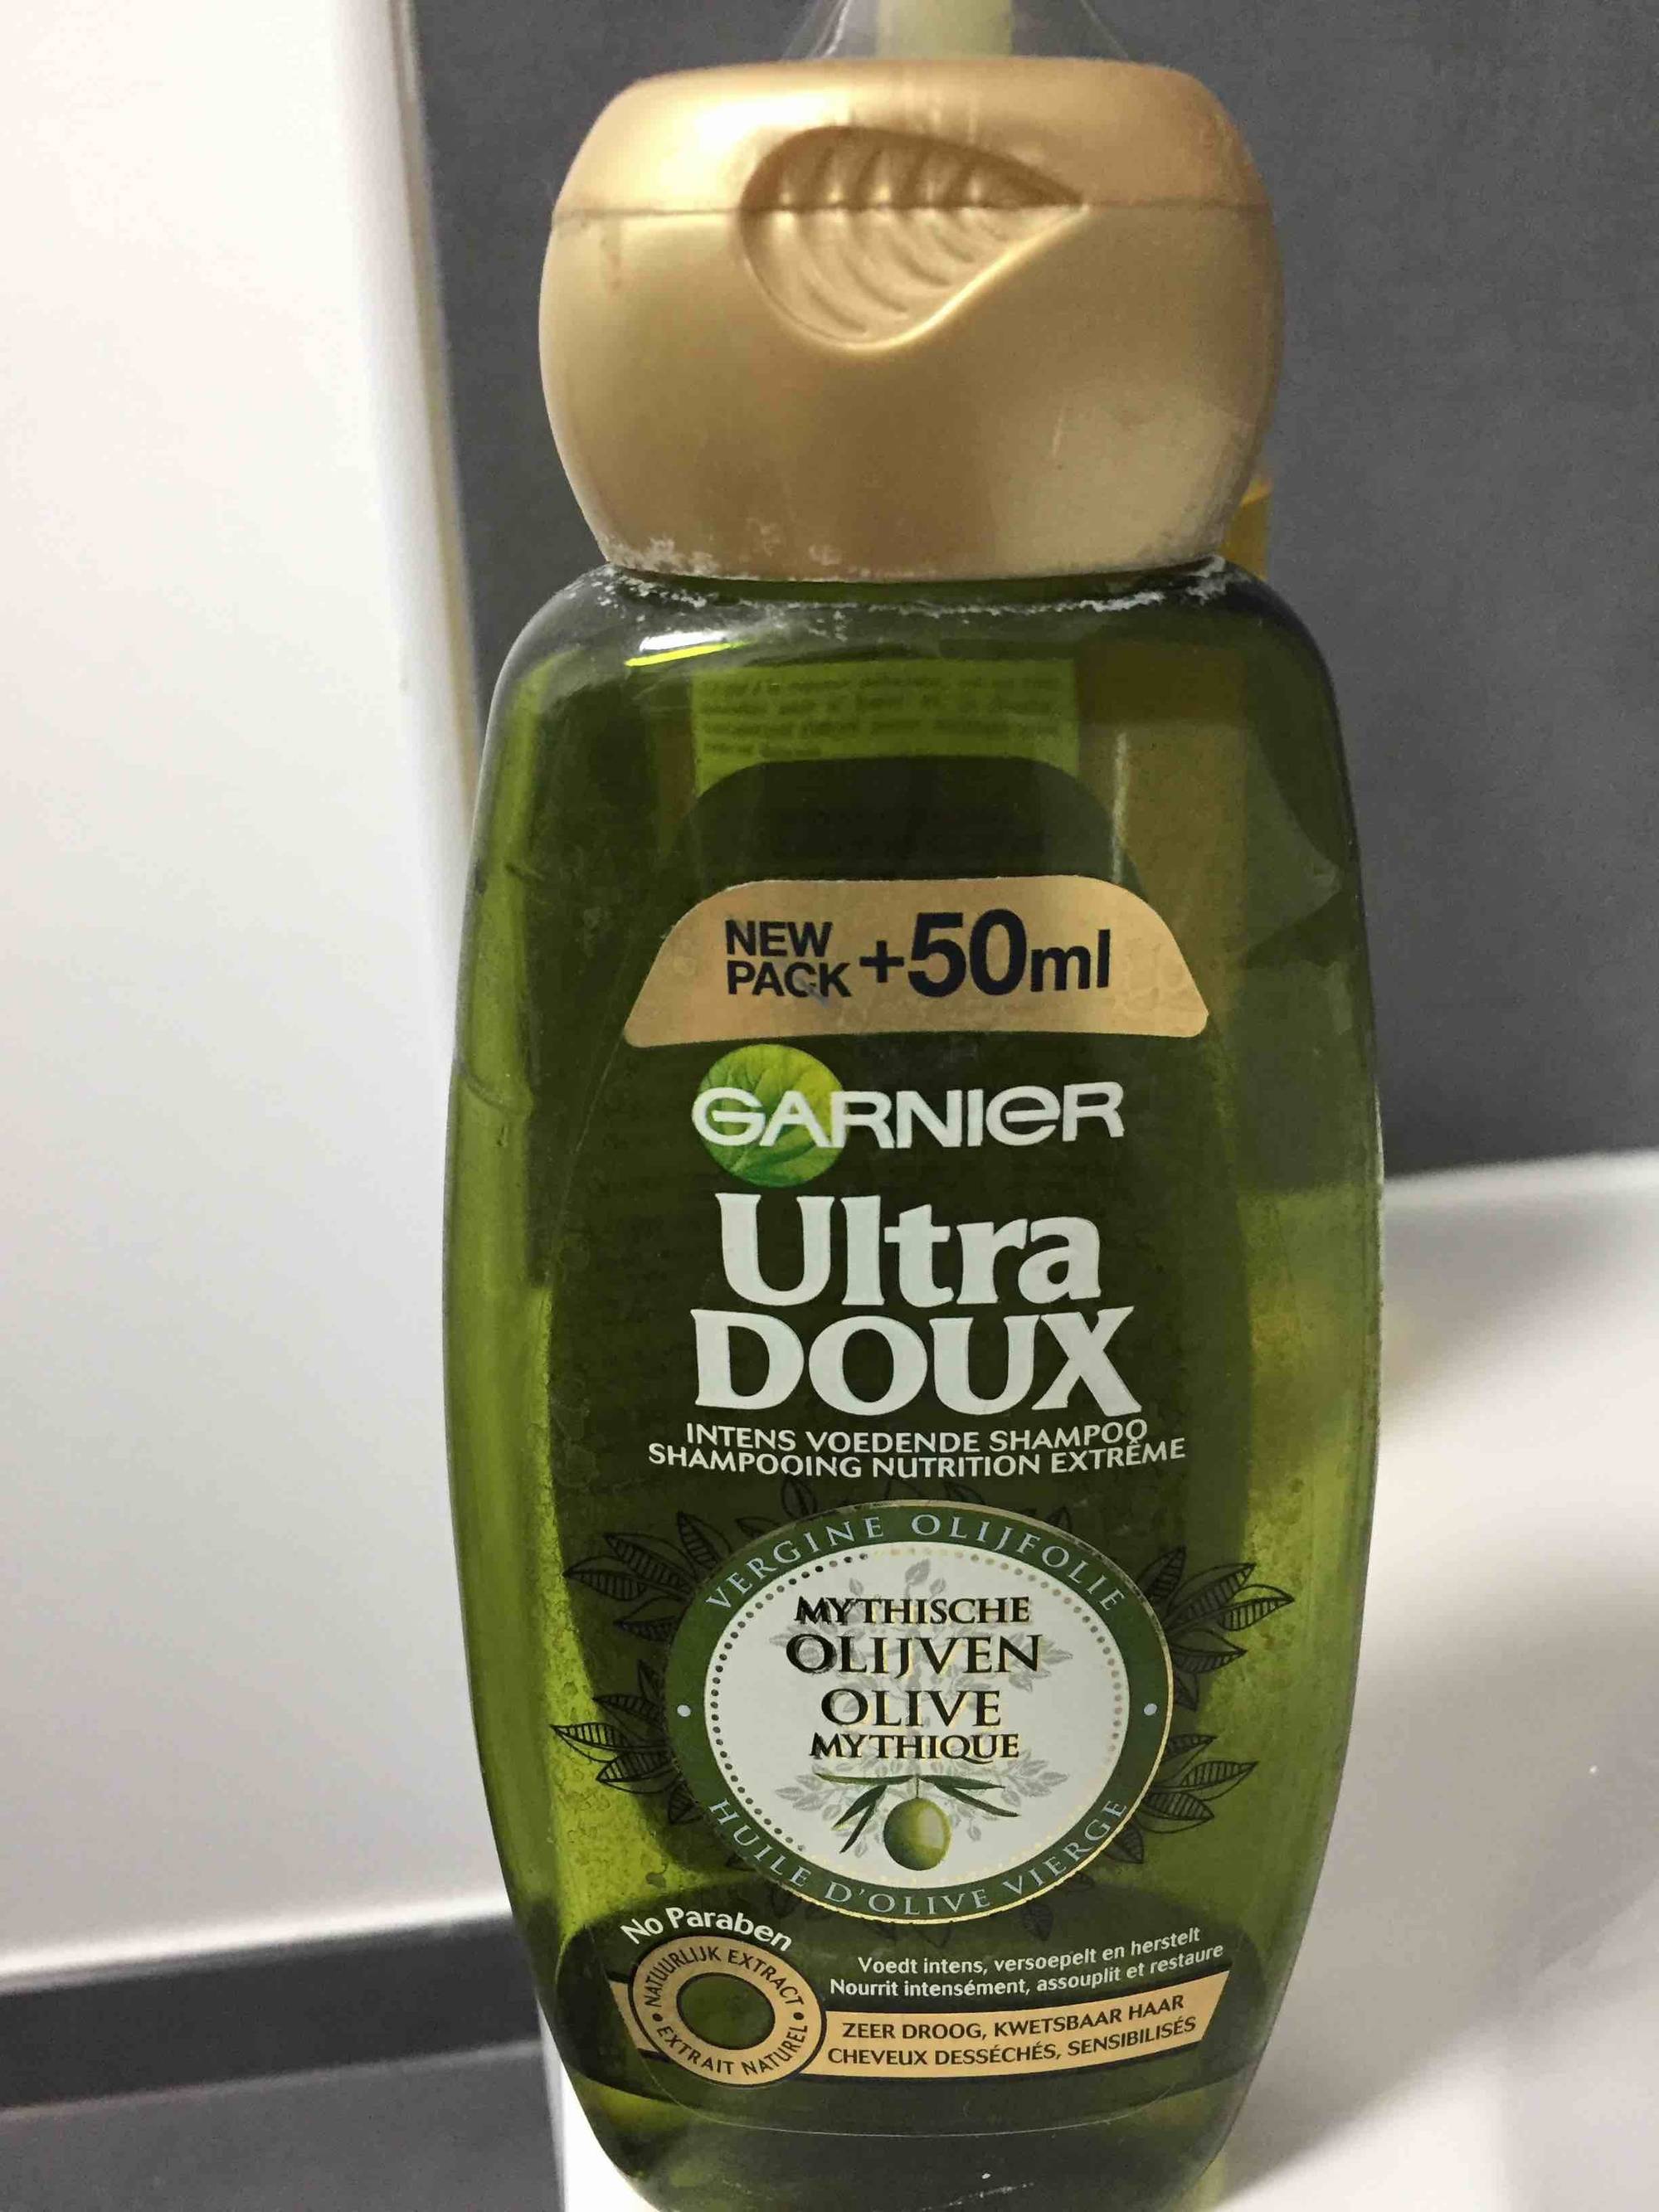 GARNIER - Ultra doux olive mythique - Shampooing nutrition extrême